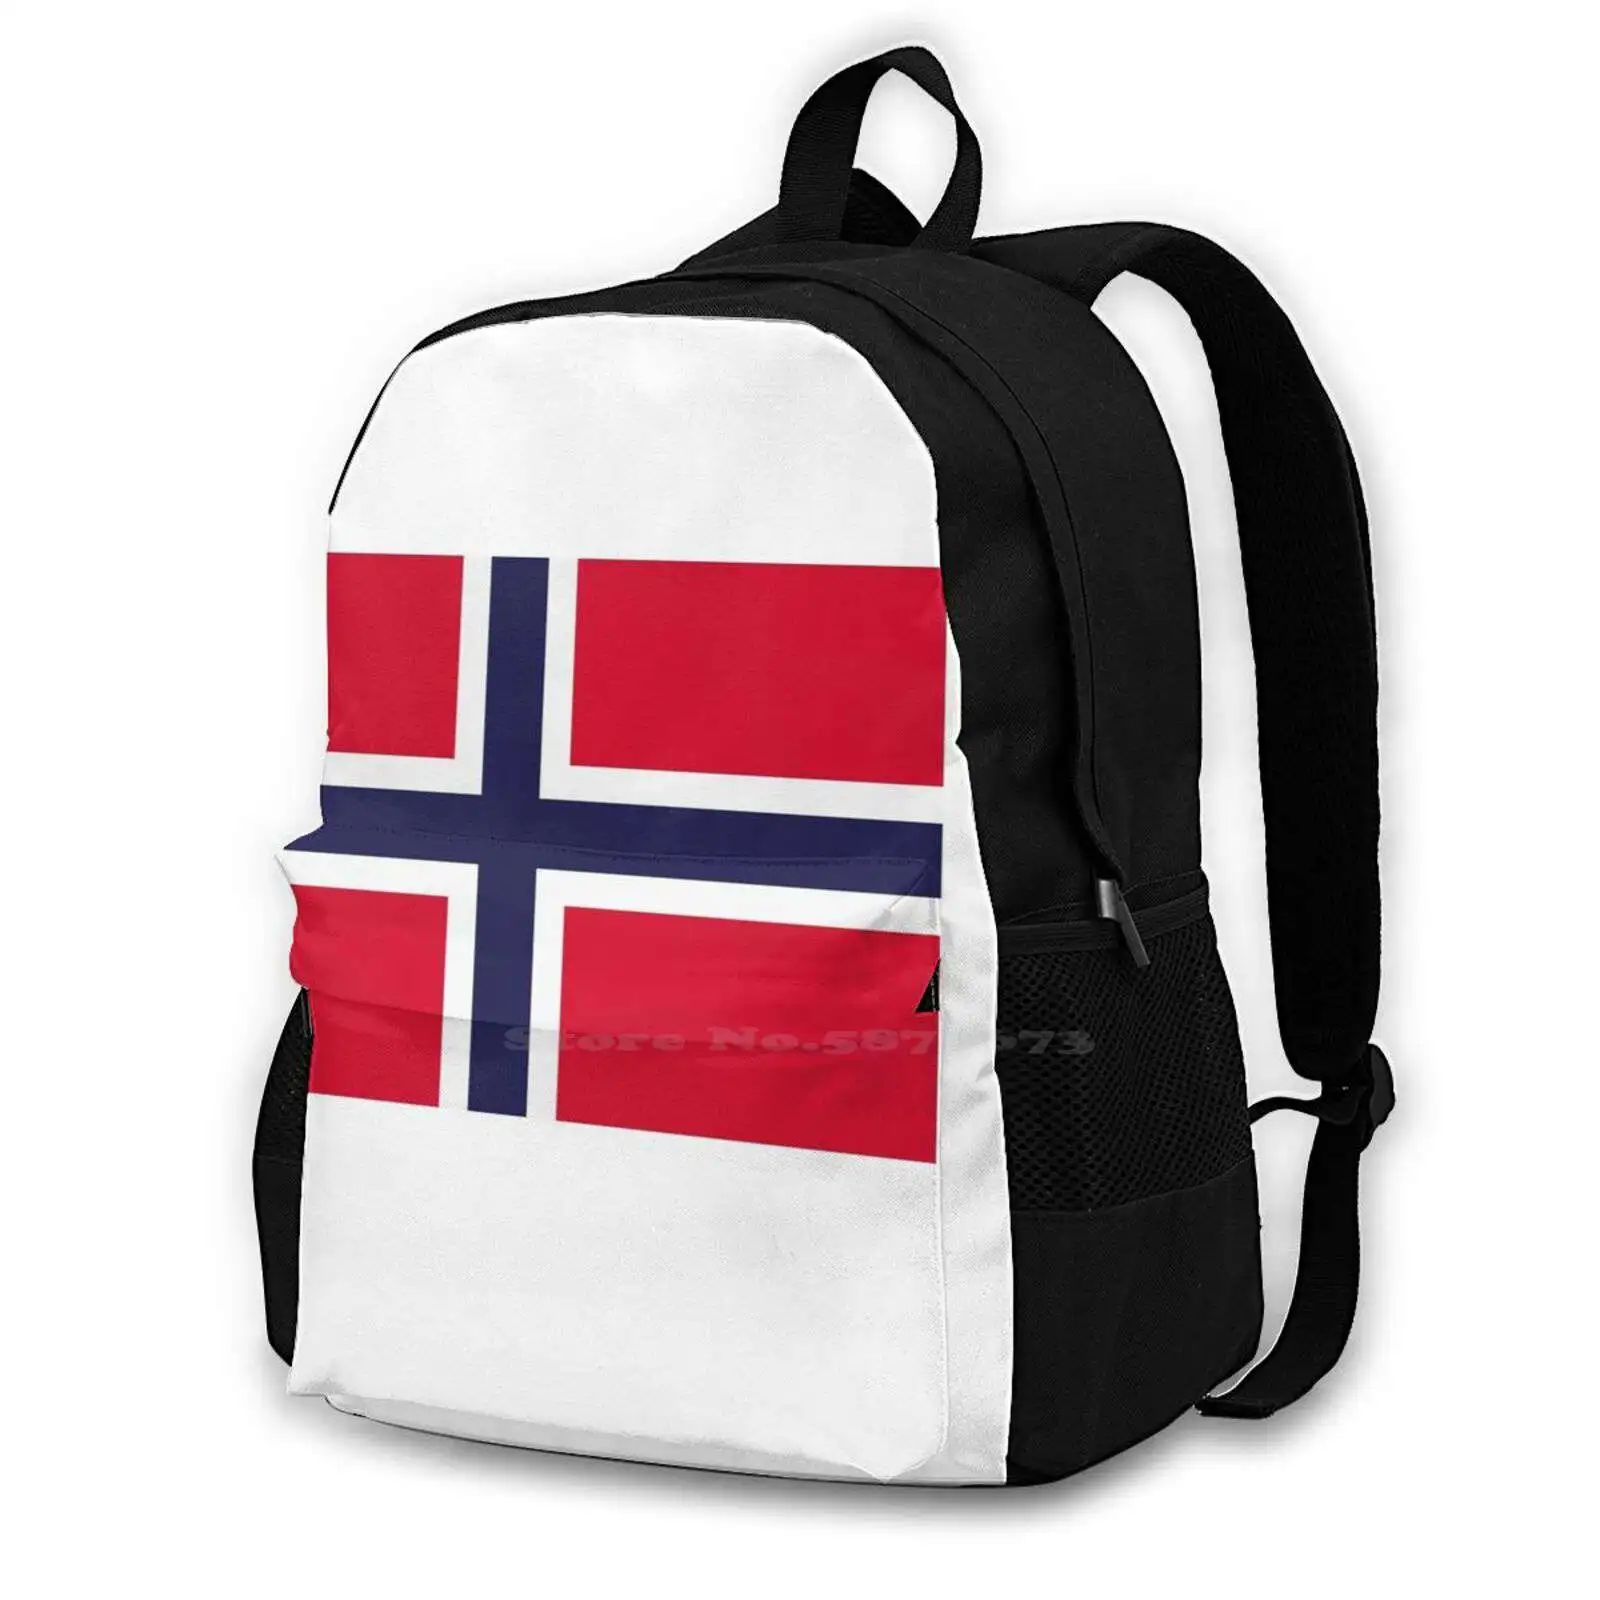 

National Flag Of Norway Fashion Travel Laptop School Backpack Bag Flag Europe Scandinavia Norway Oslo Trondheim Bergen The